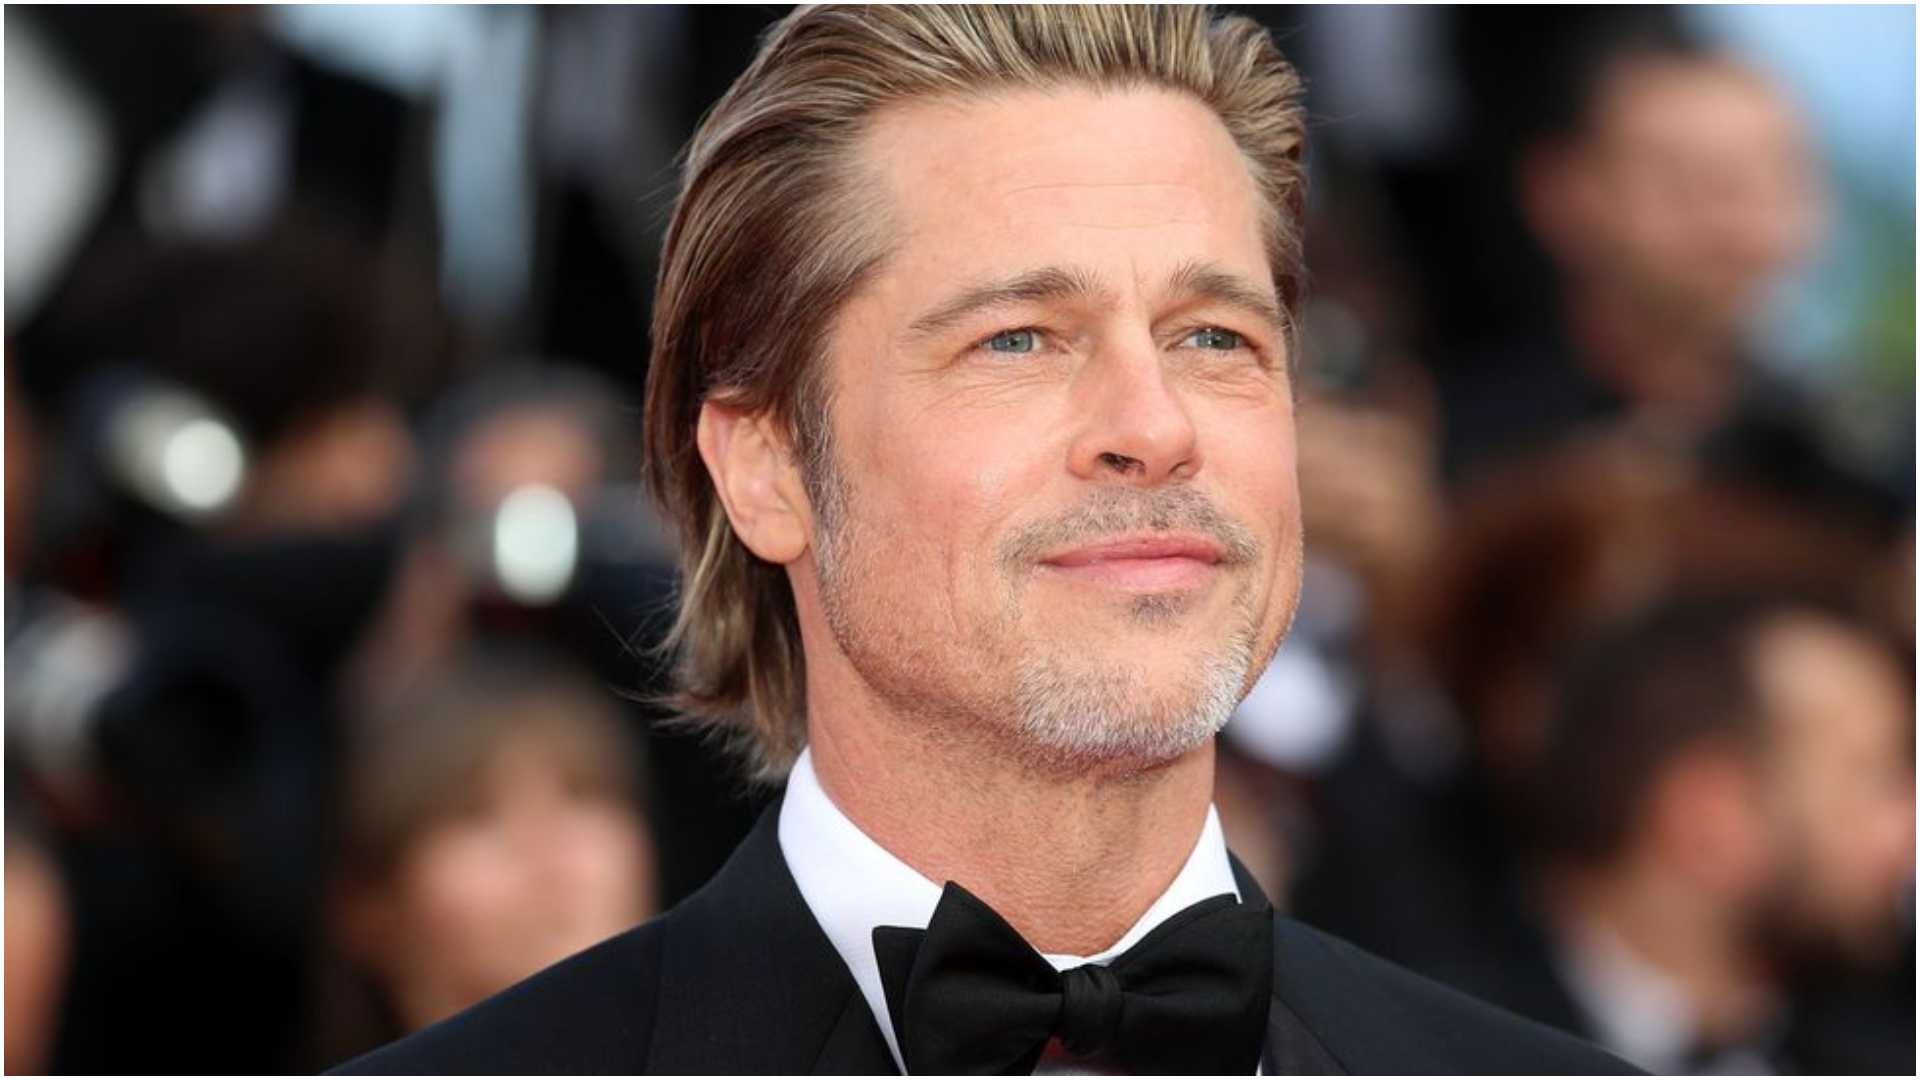 Angelina Jolie seeks custody amid divorce from Brad Pitt, privacy plea